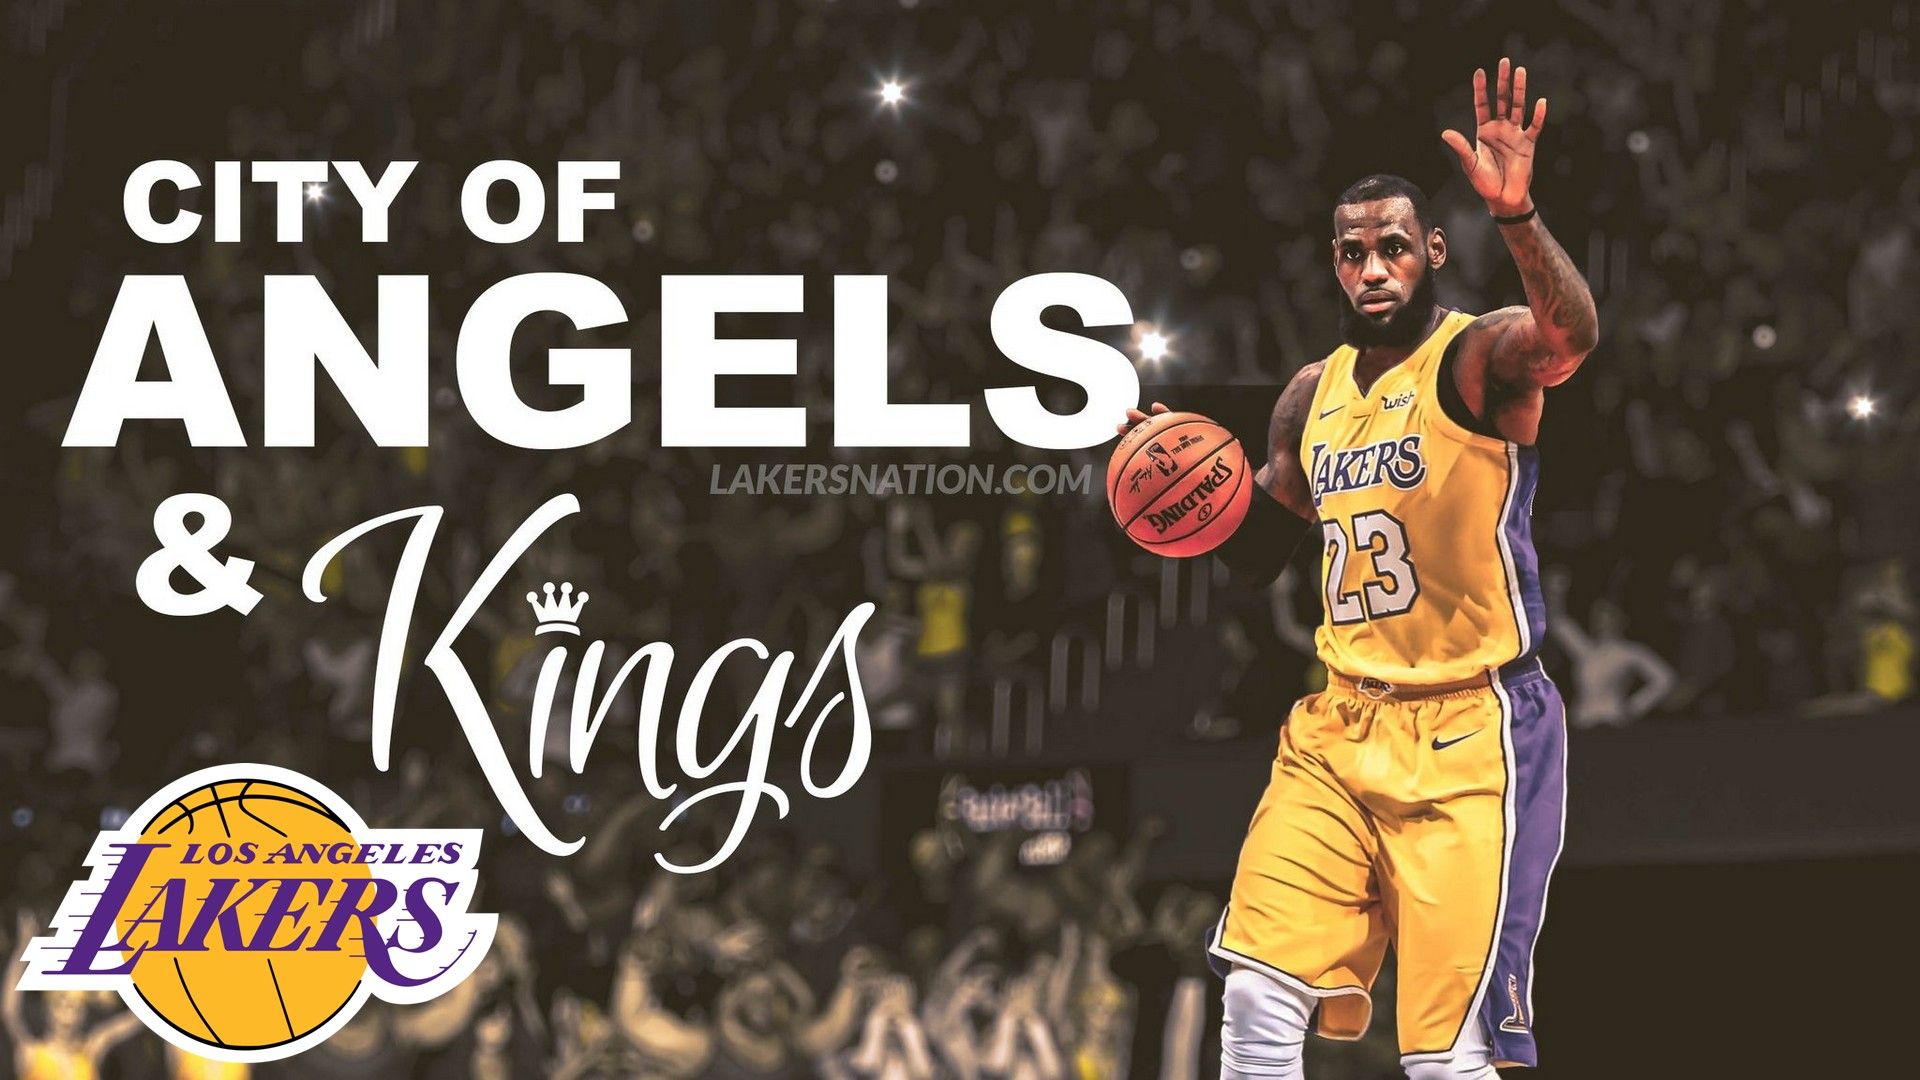 Wallpaper LeBron James Lakers .wallpaperbasketball.com